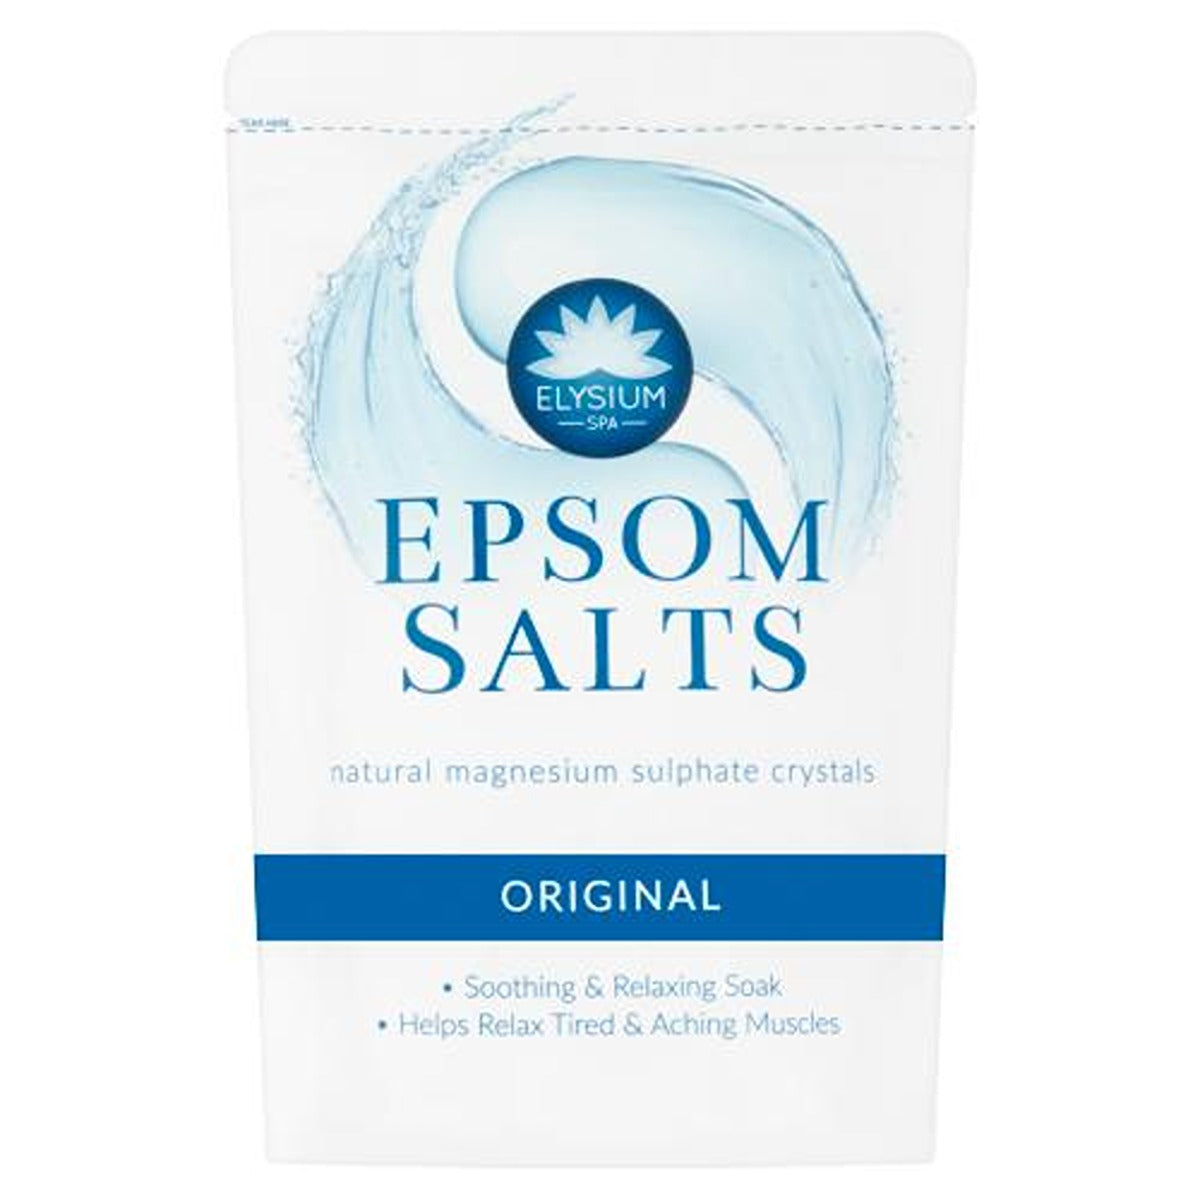 Elysium - Spa Epsom Salts Original - 450g - Continental Food Store